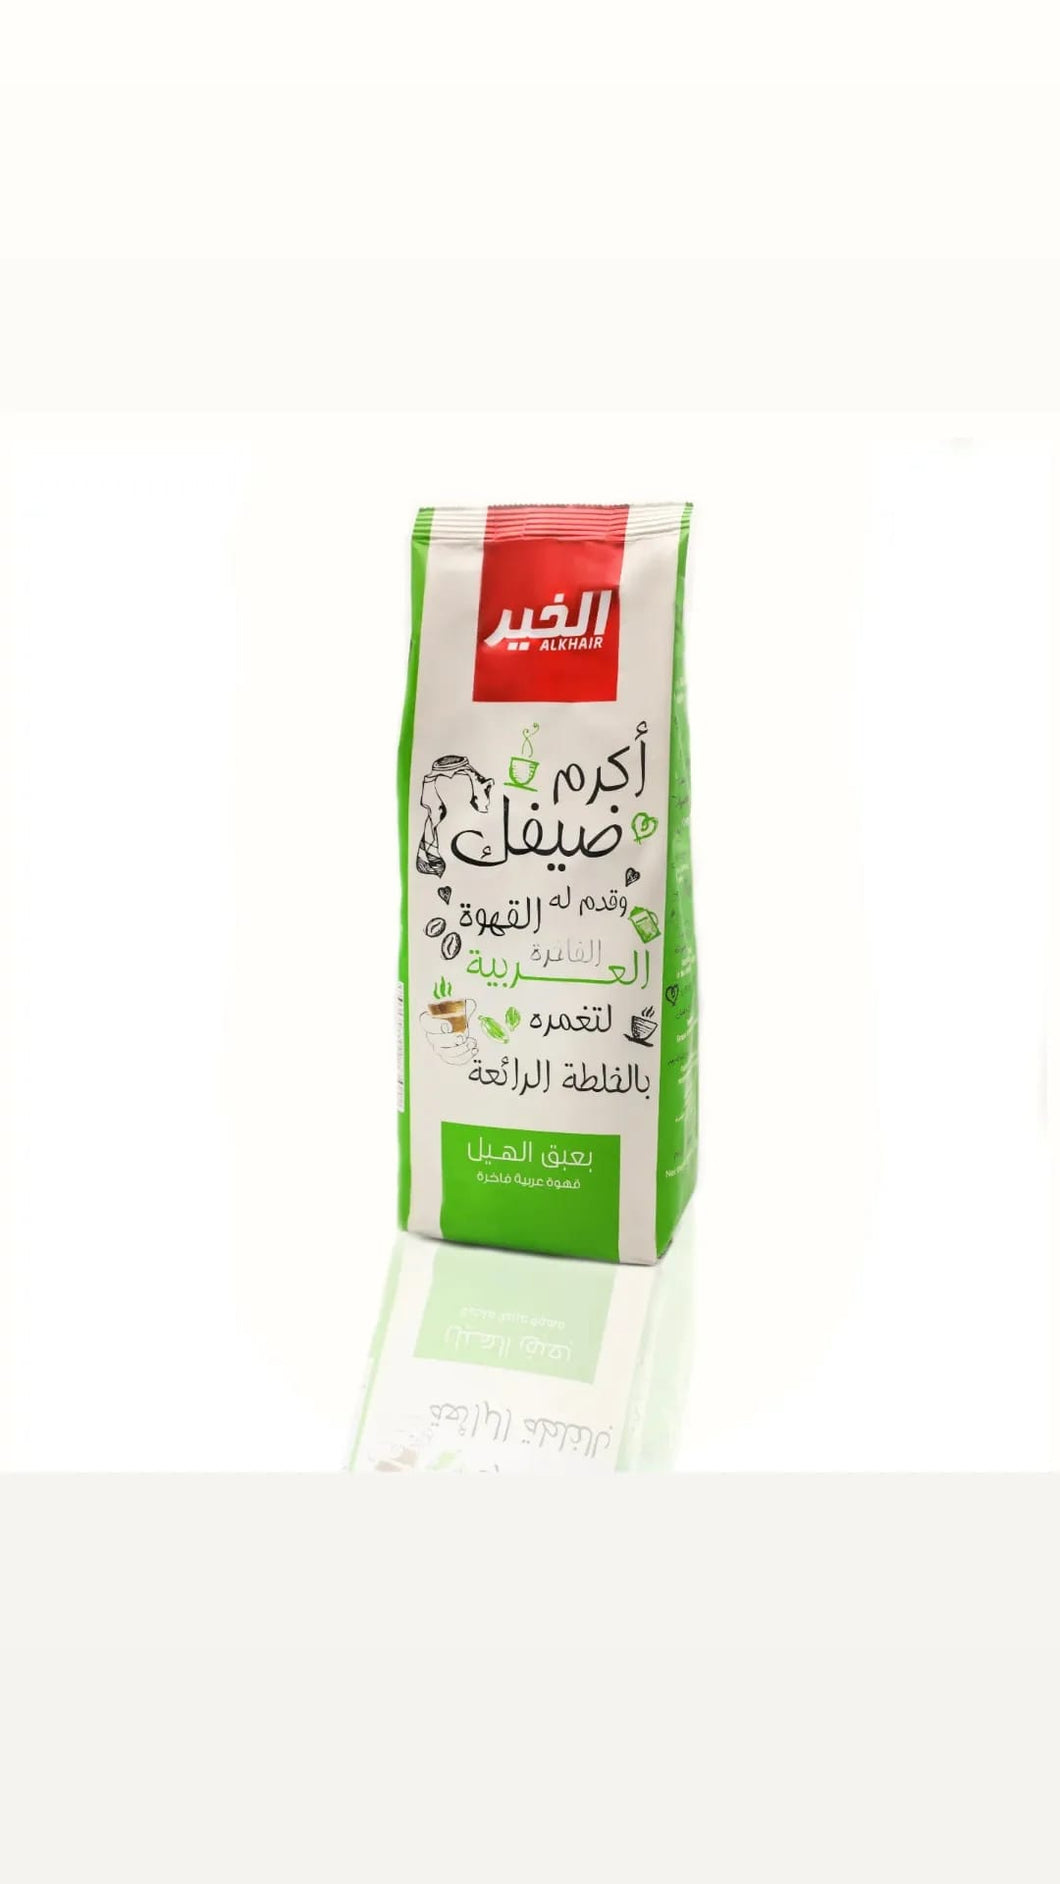 Al Khair Original Taste Coffee